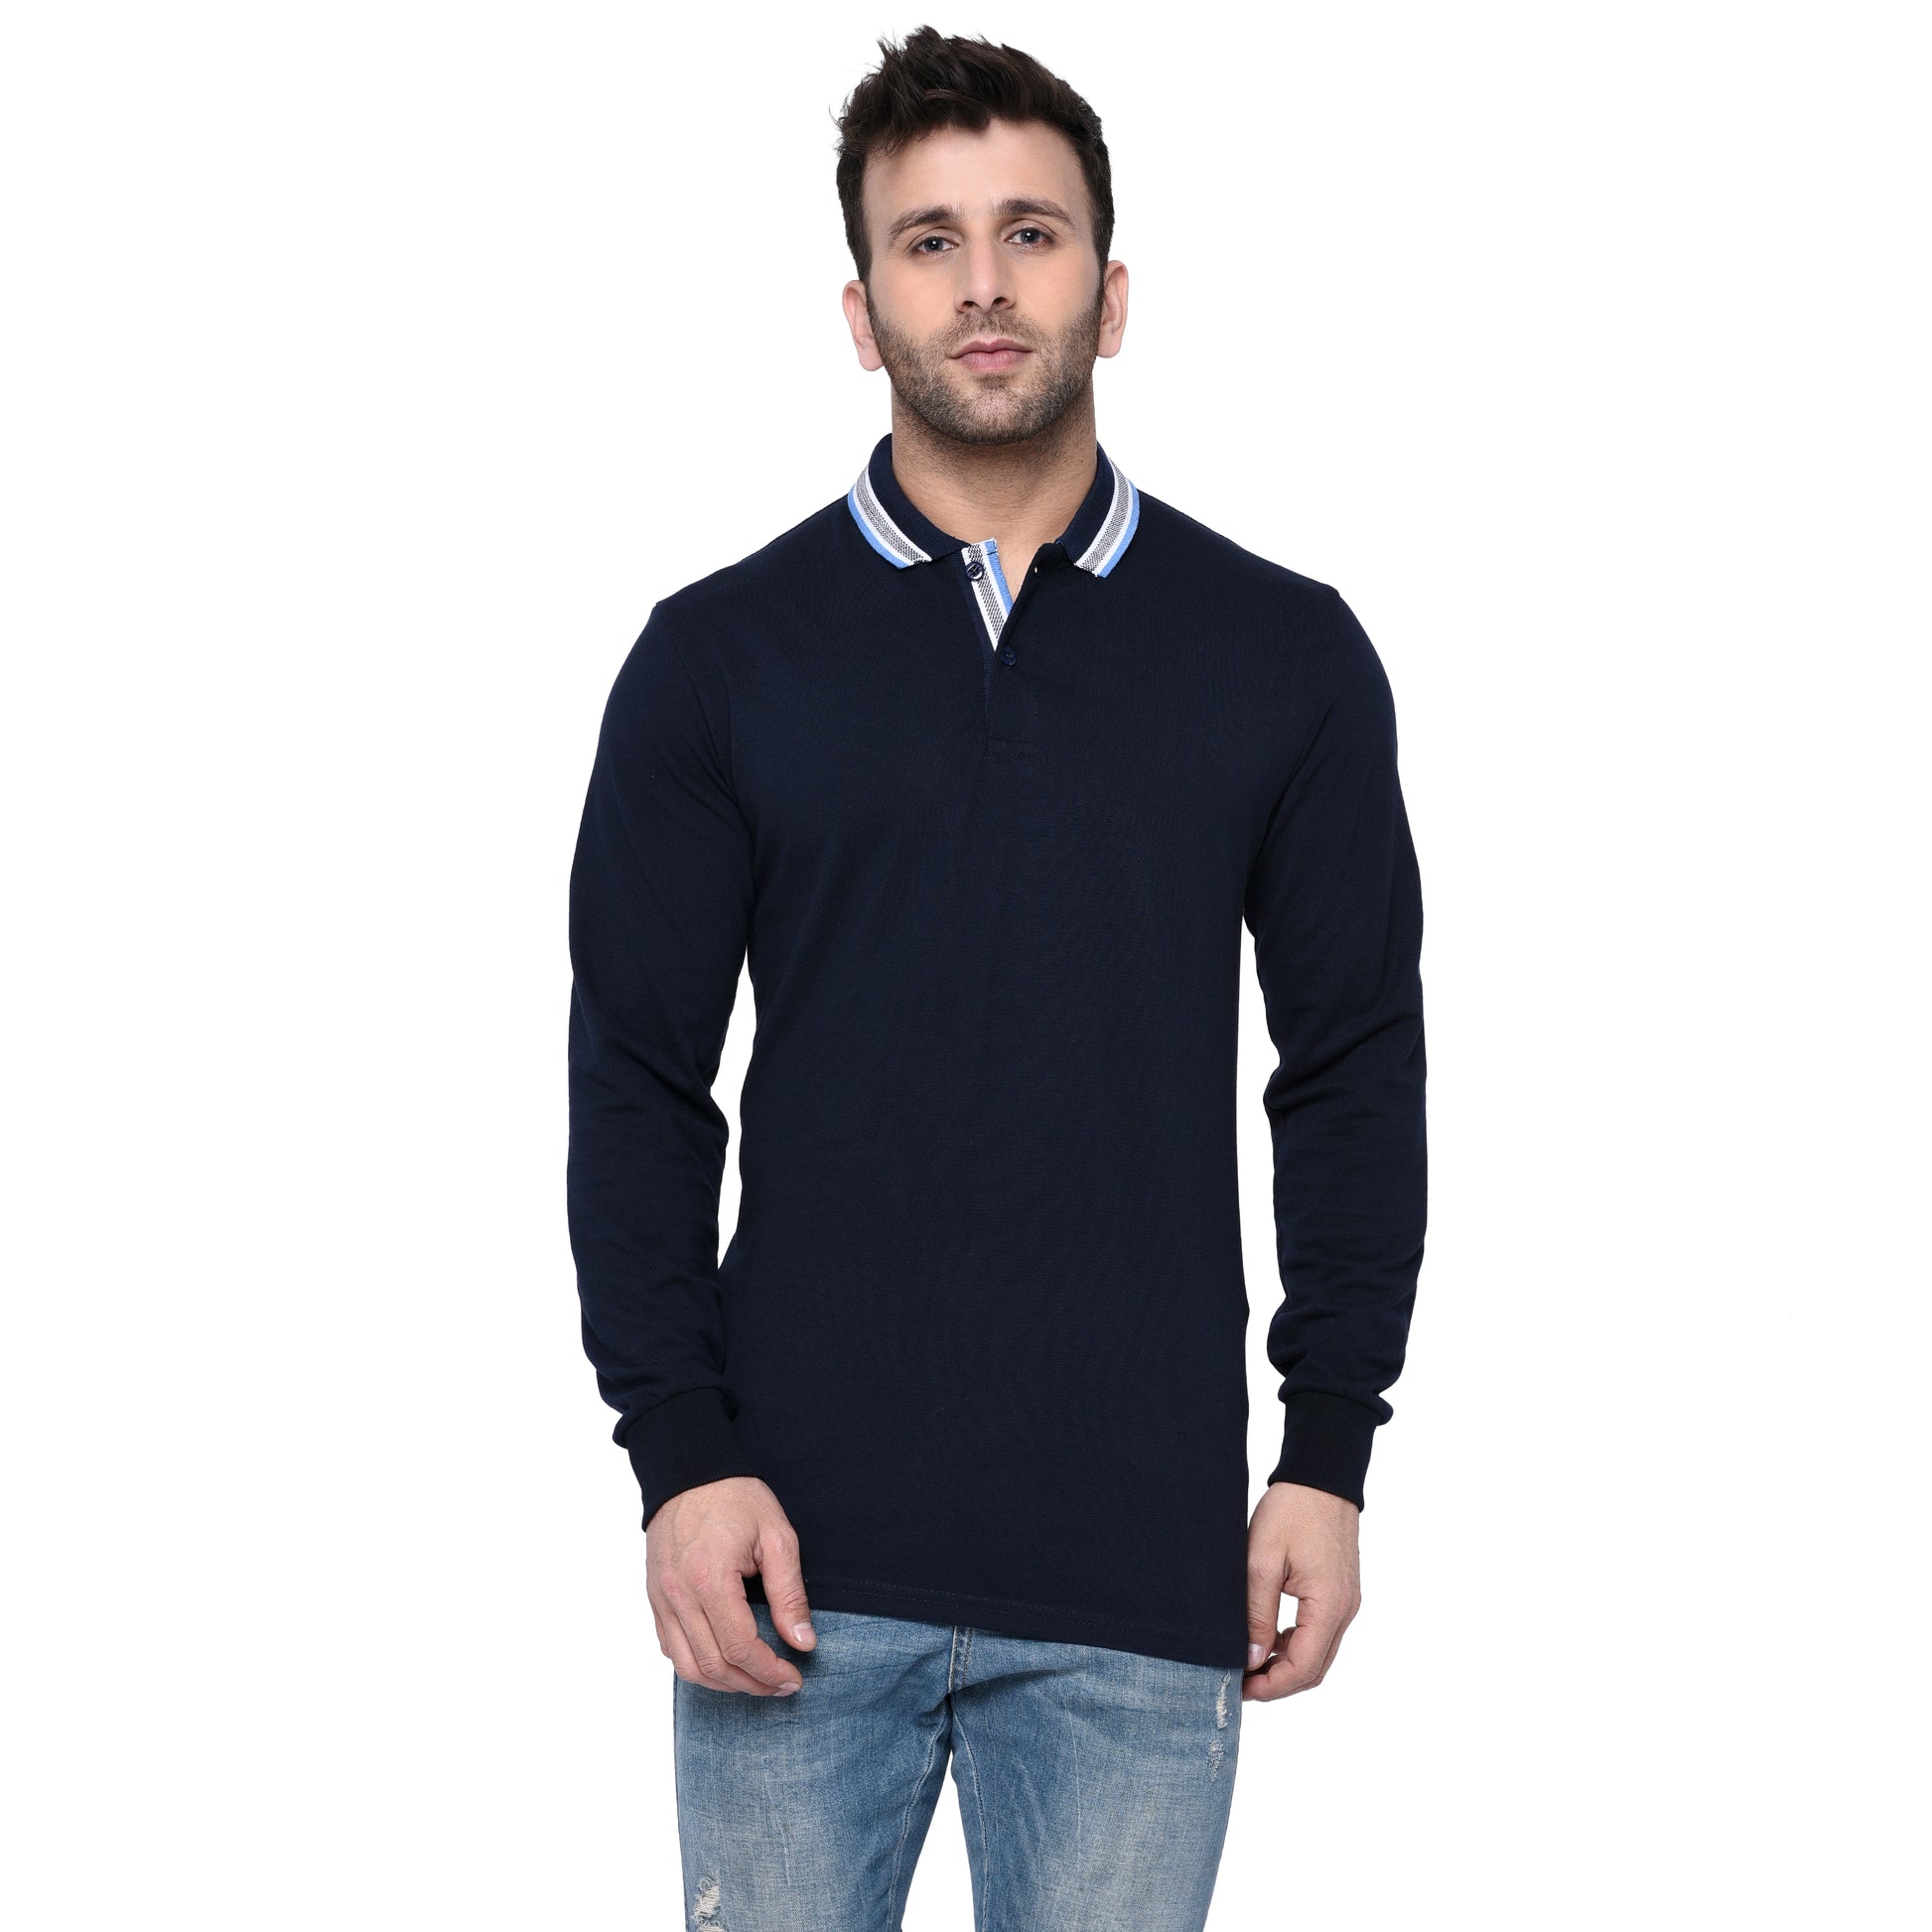 EPG Half Sleeve's Pure Cotton Men's Polo ( Collar) T shirt - Sky Blue color Medium (M) (38) / AZURE ( SKY BLUE )